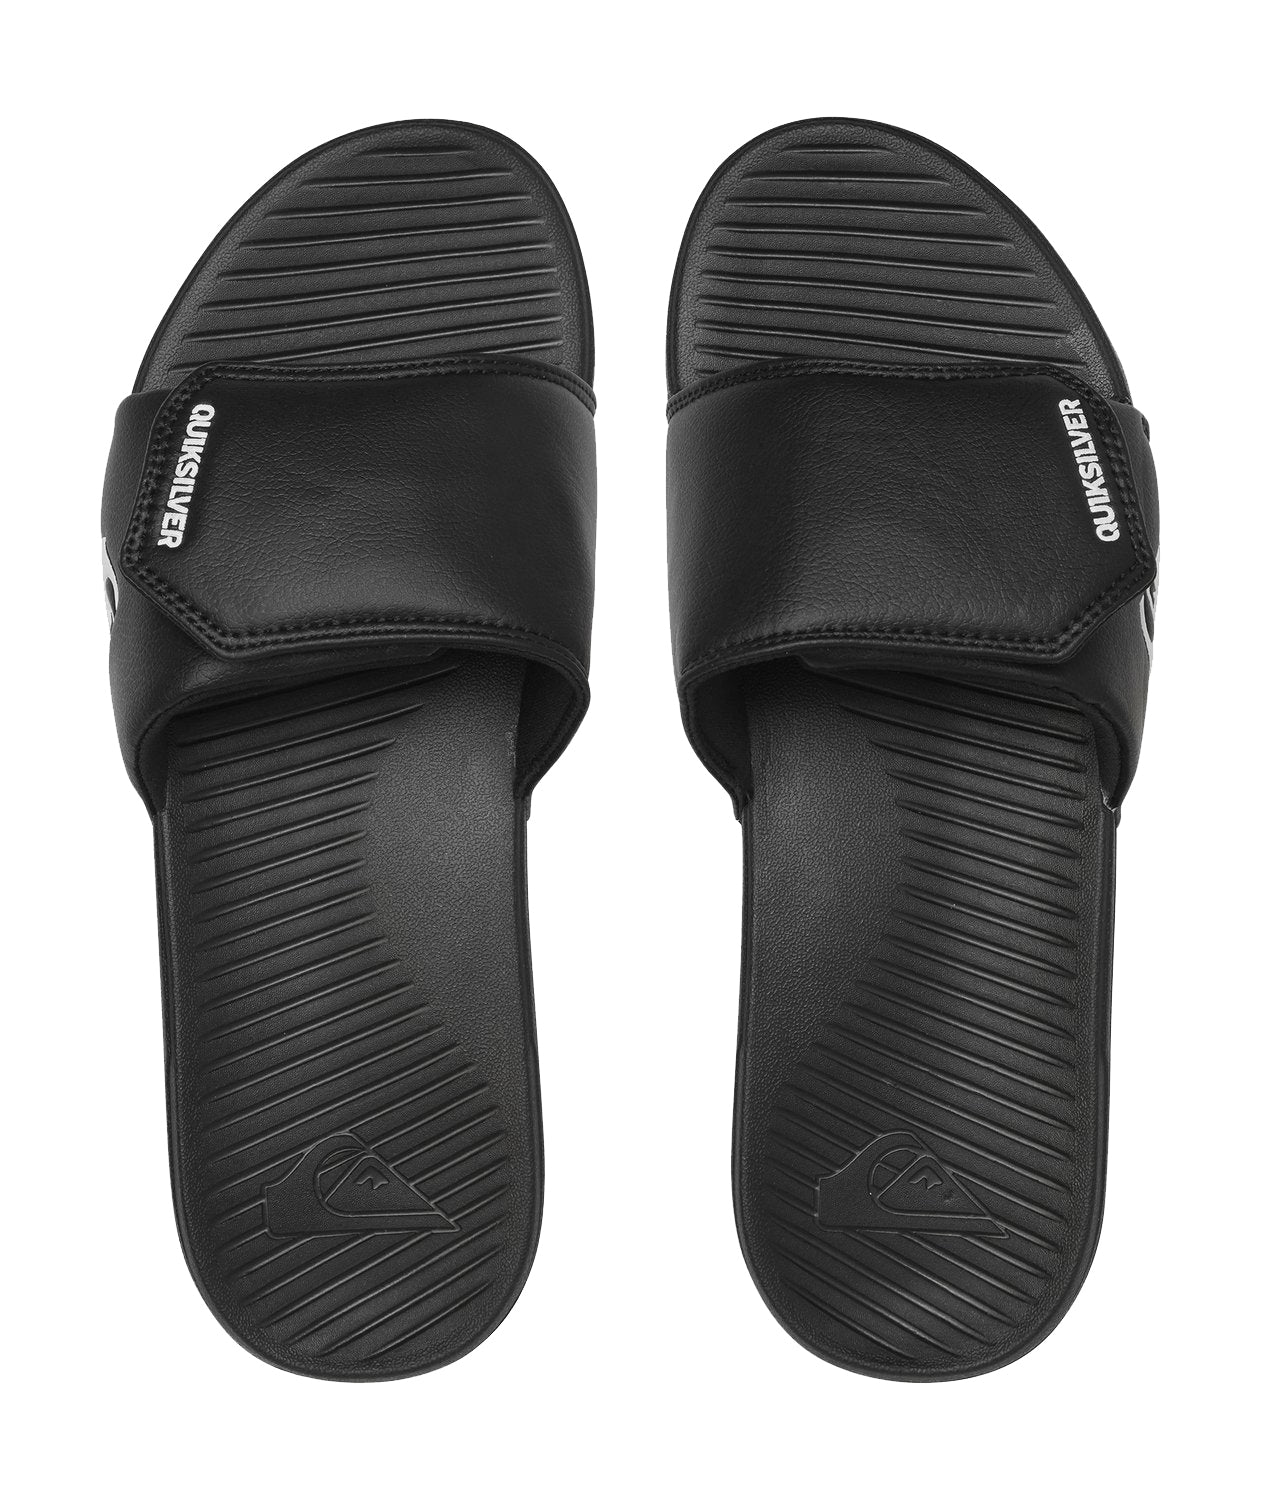 Quiksilver Bright Coast Adjust Mens Sandal XKWK-Black-White-Black 12